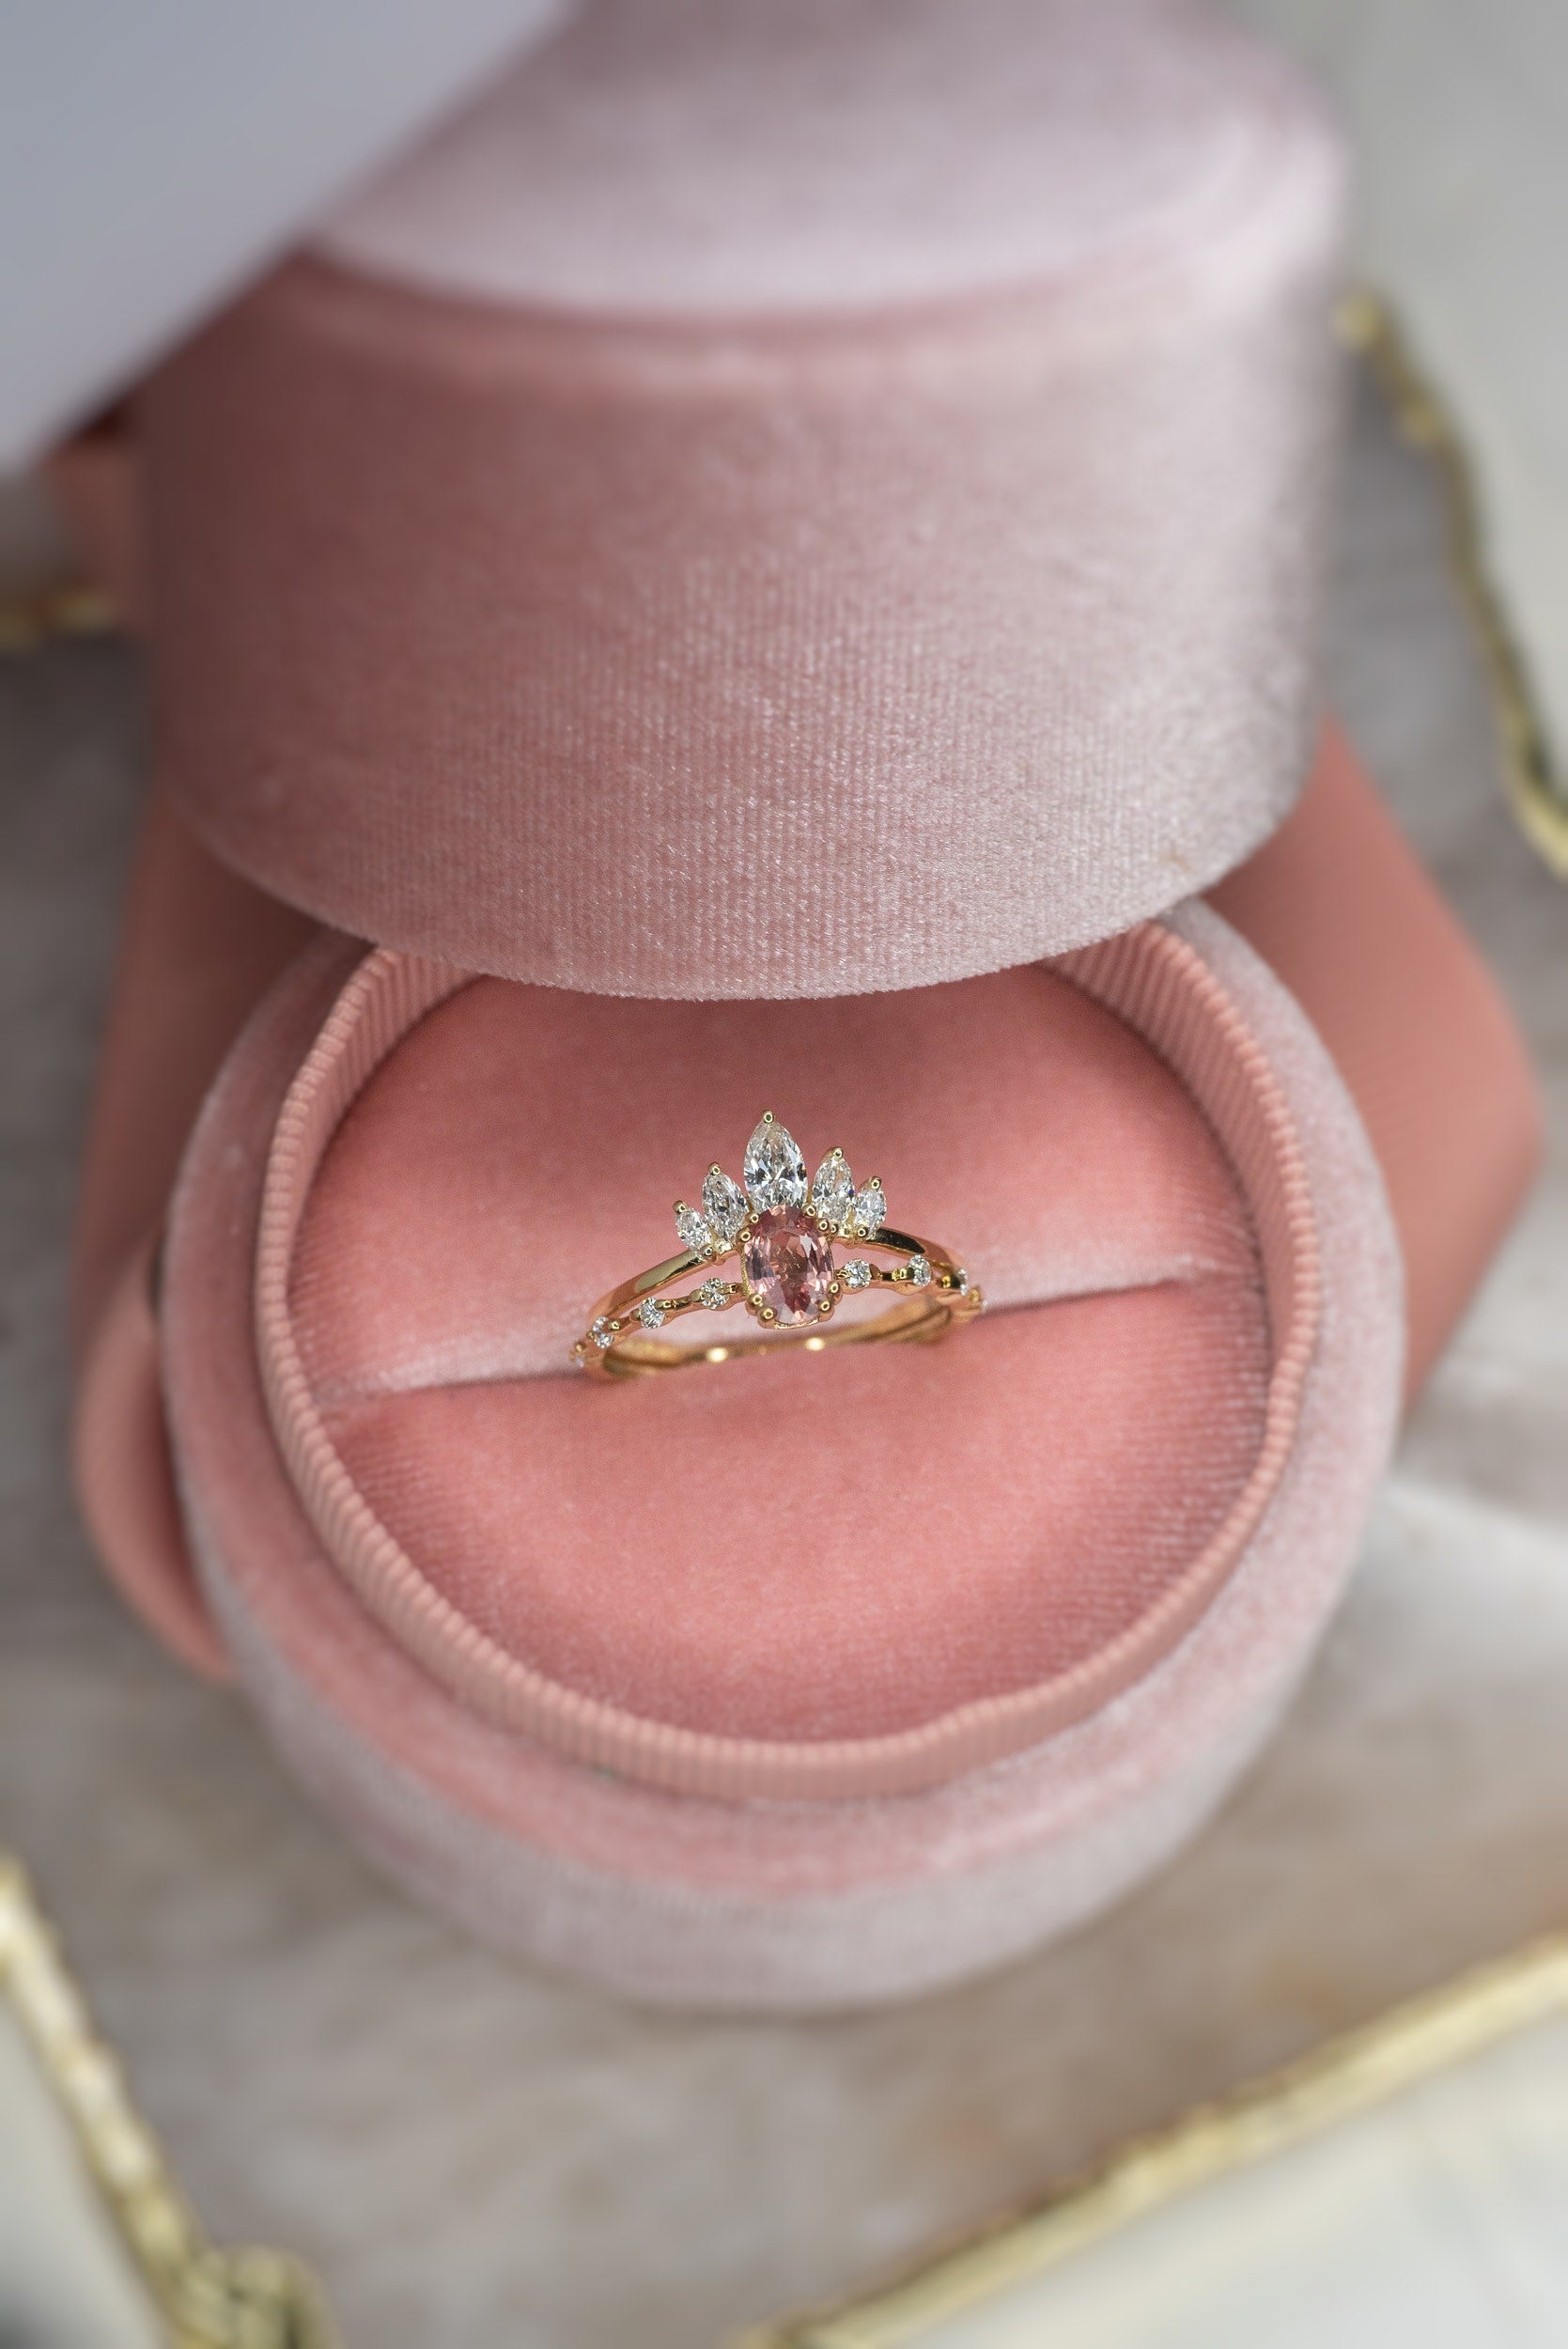 Crown of Skye - Lelya - bespoke engagement and wedding rings made in Scotland, UK